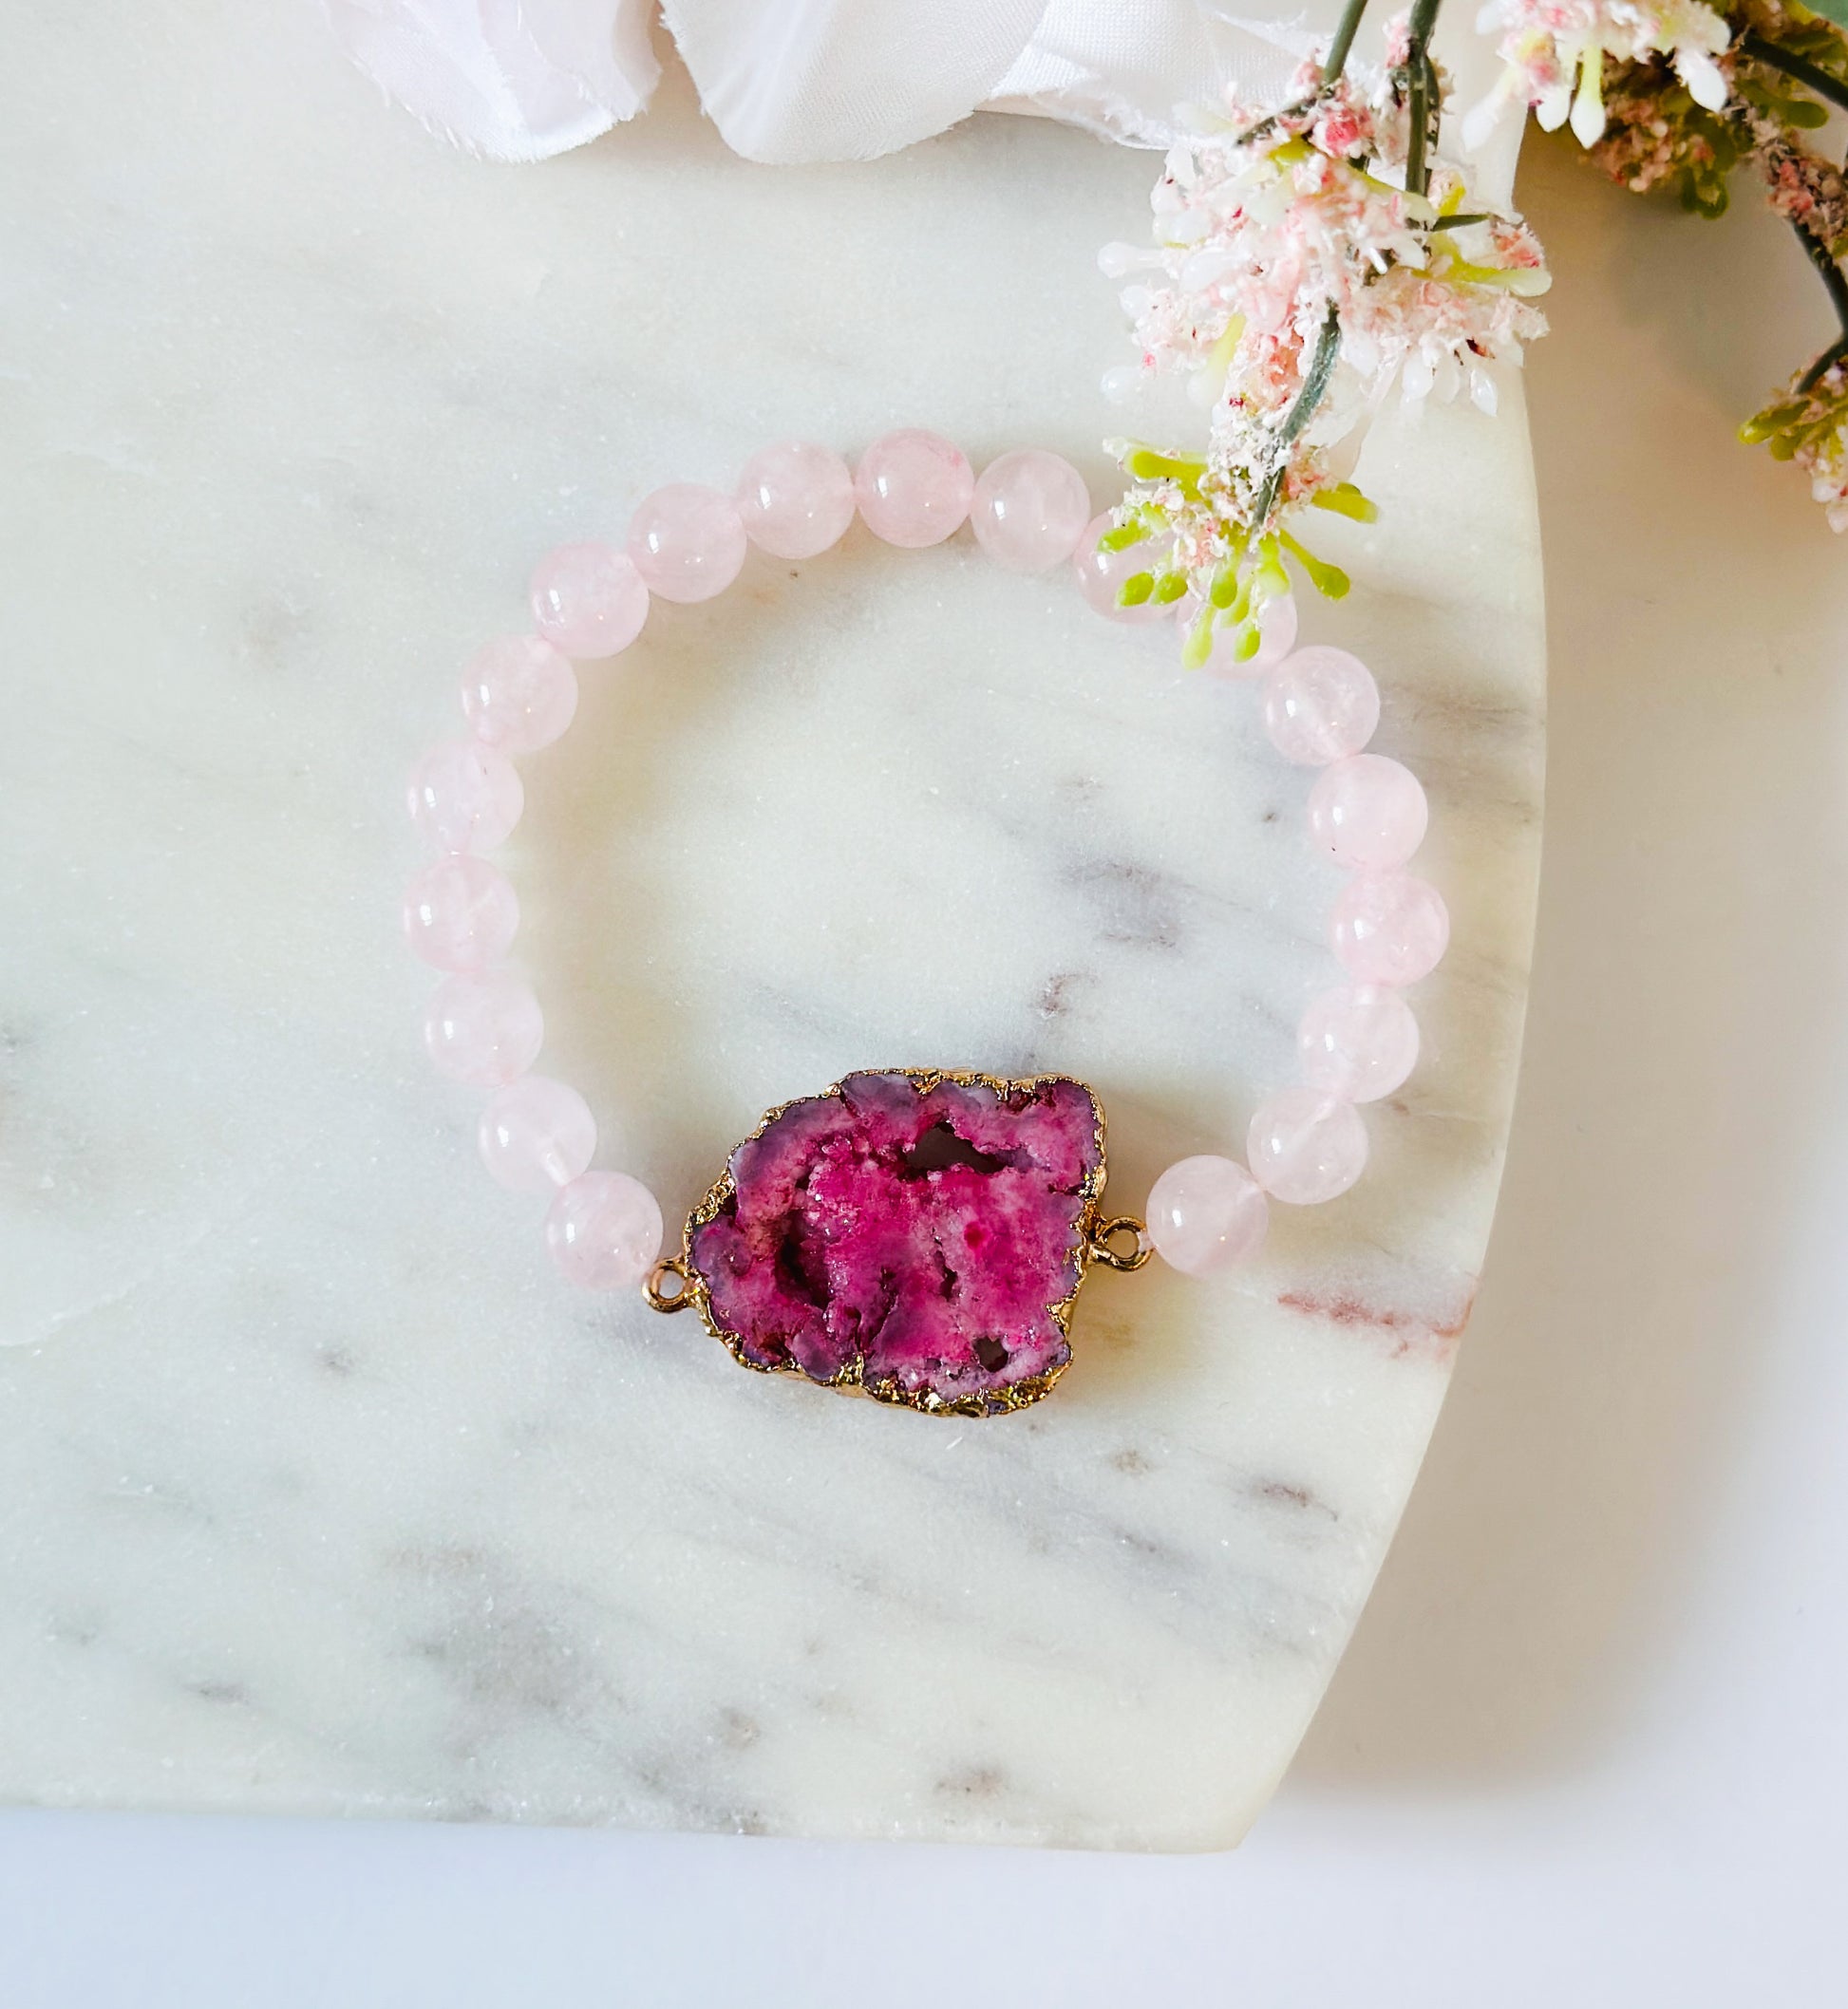  pink Druzy Agate gemstone connector bracelet with Rose Quartz gemstones